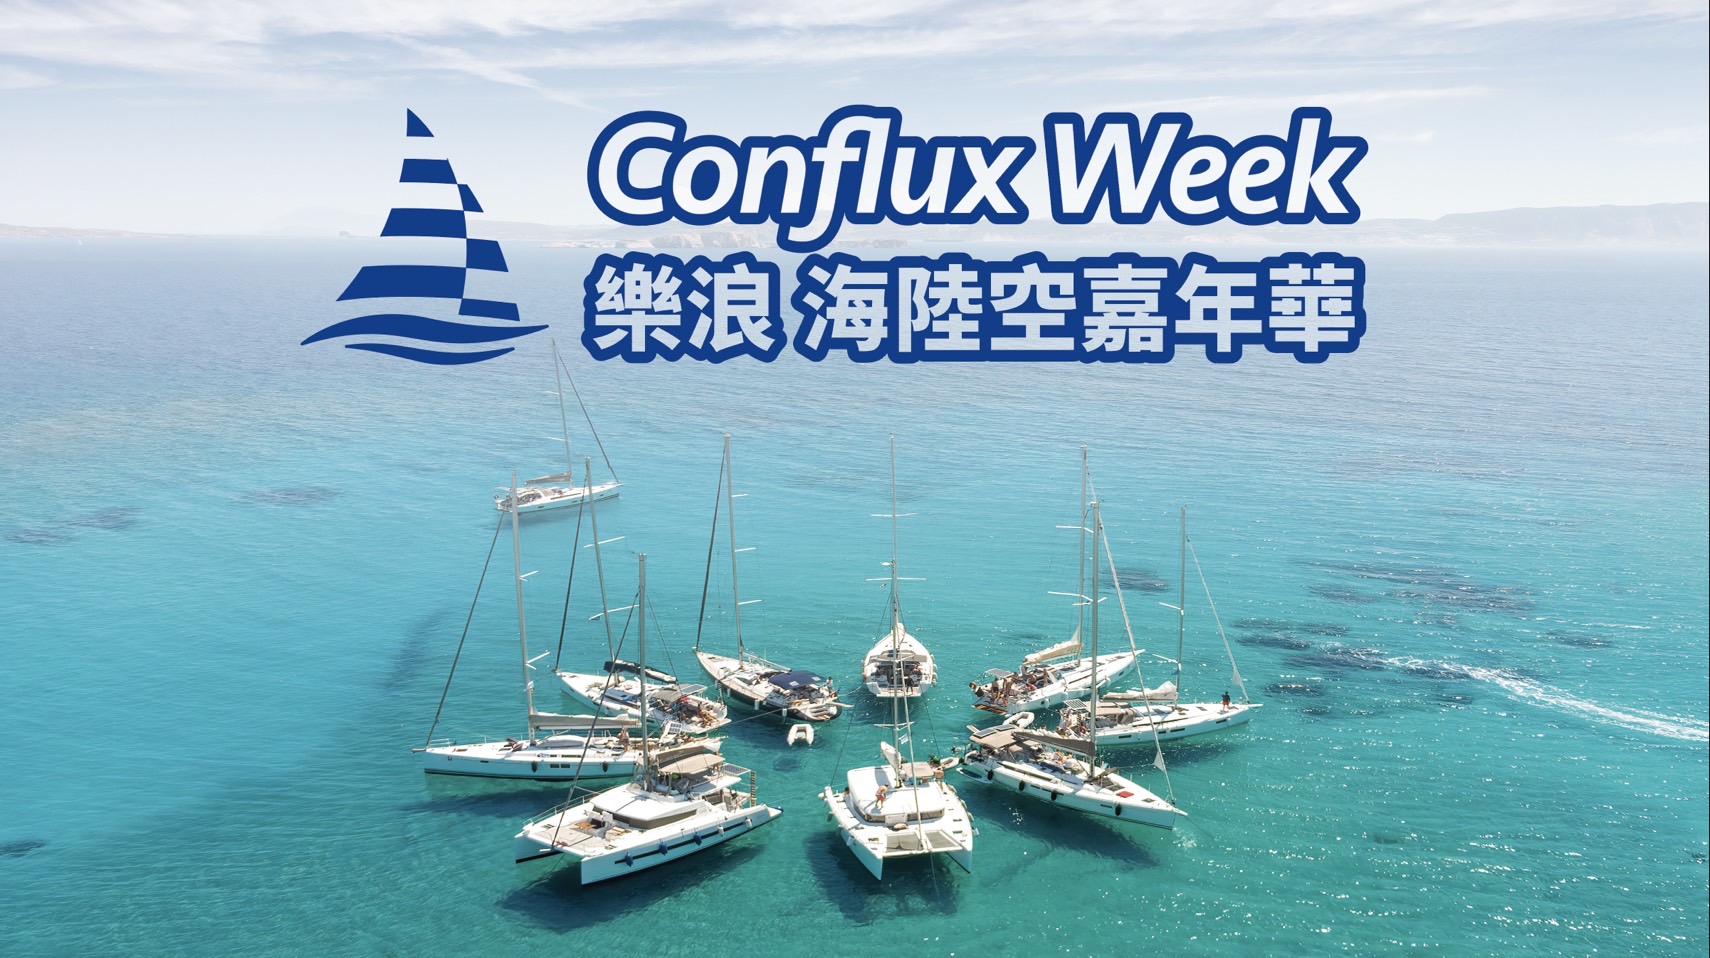 Conflux Week 樂浪海陸空嘉年華